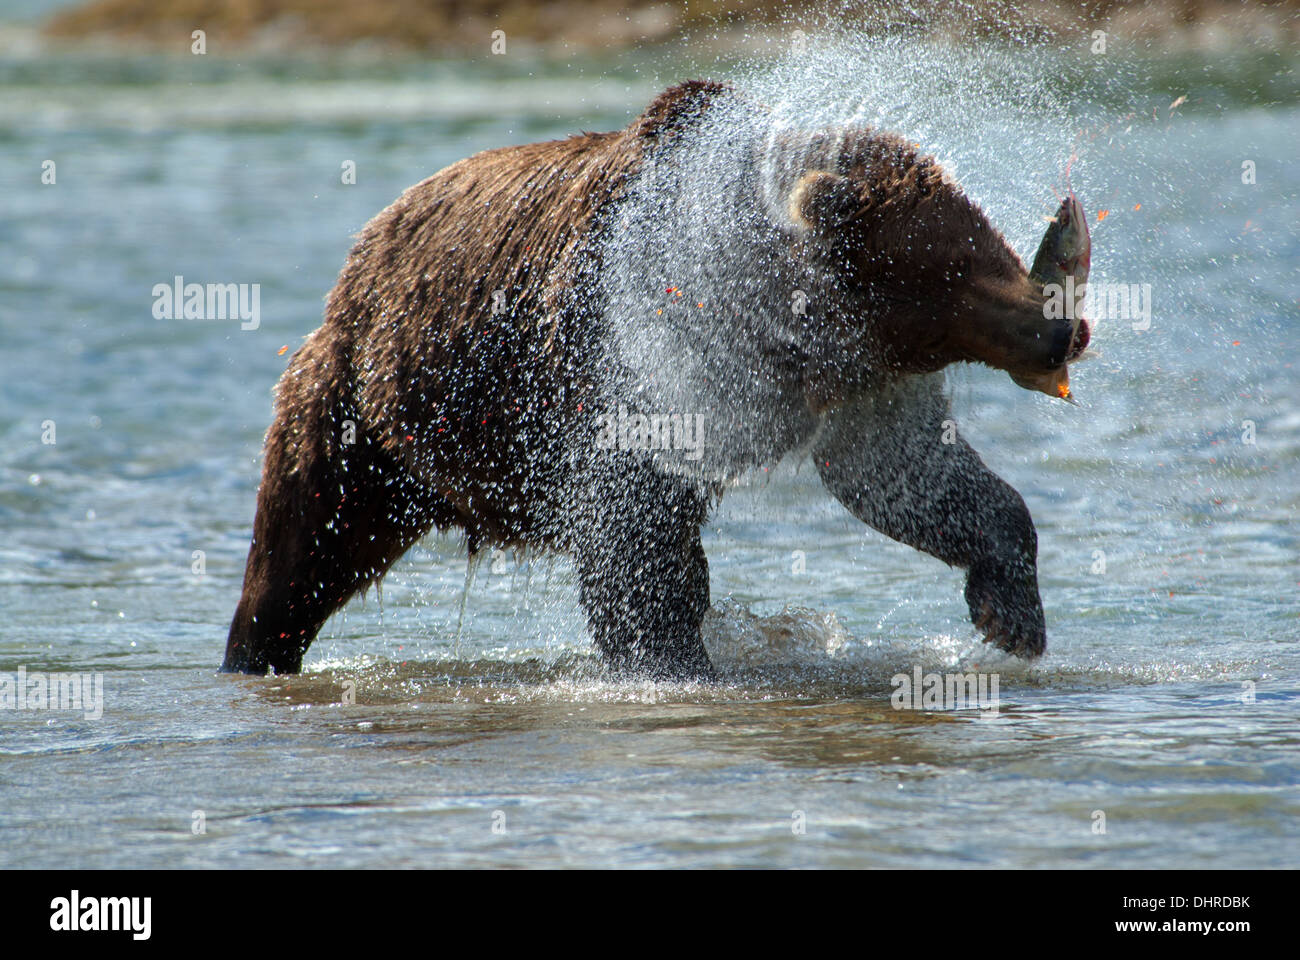 Brown bear with salmon in mouth shaking water off head, roe flying, Kinak Bay, Katmai NP. Alaska Stock Photo